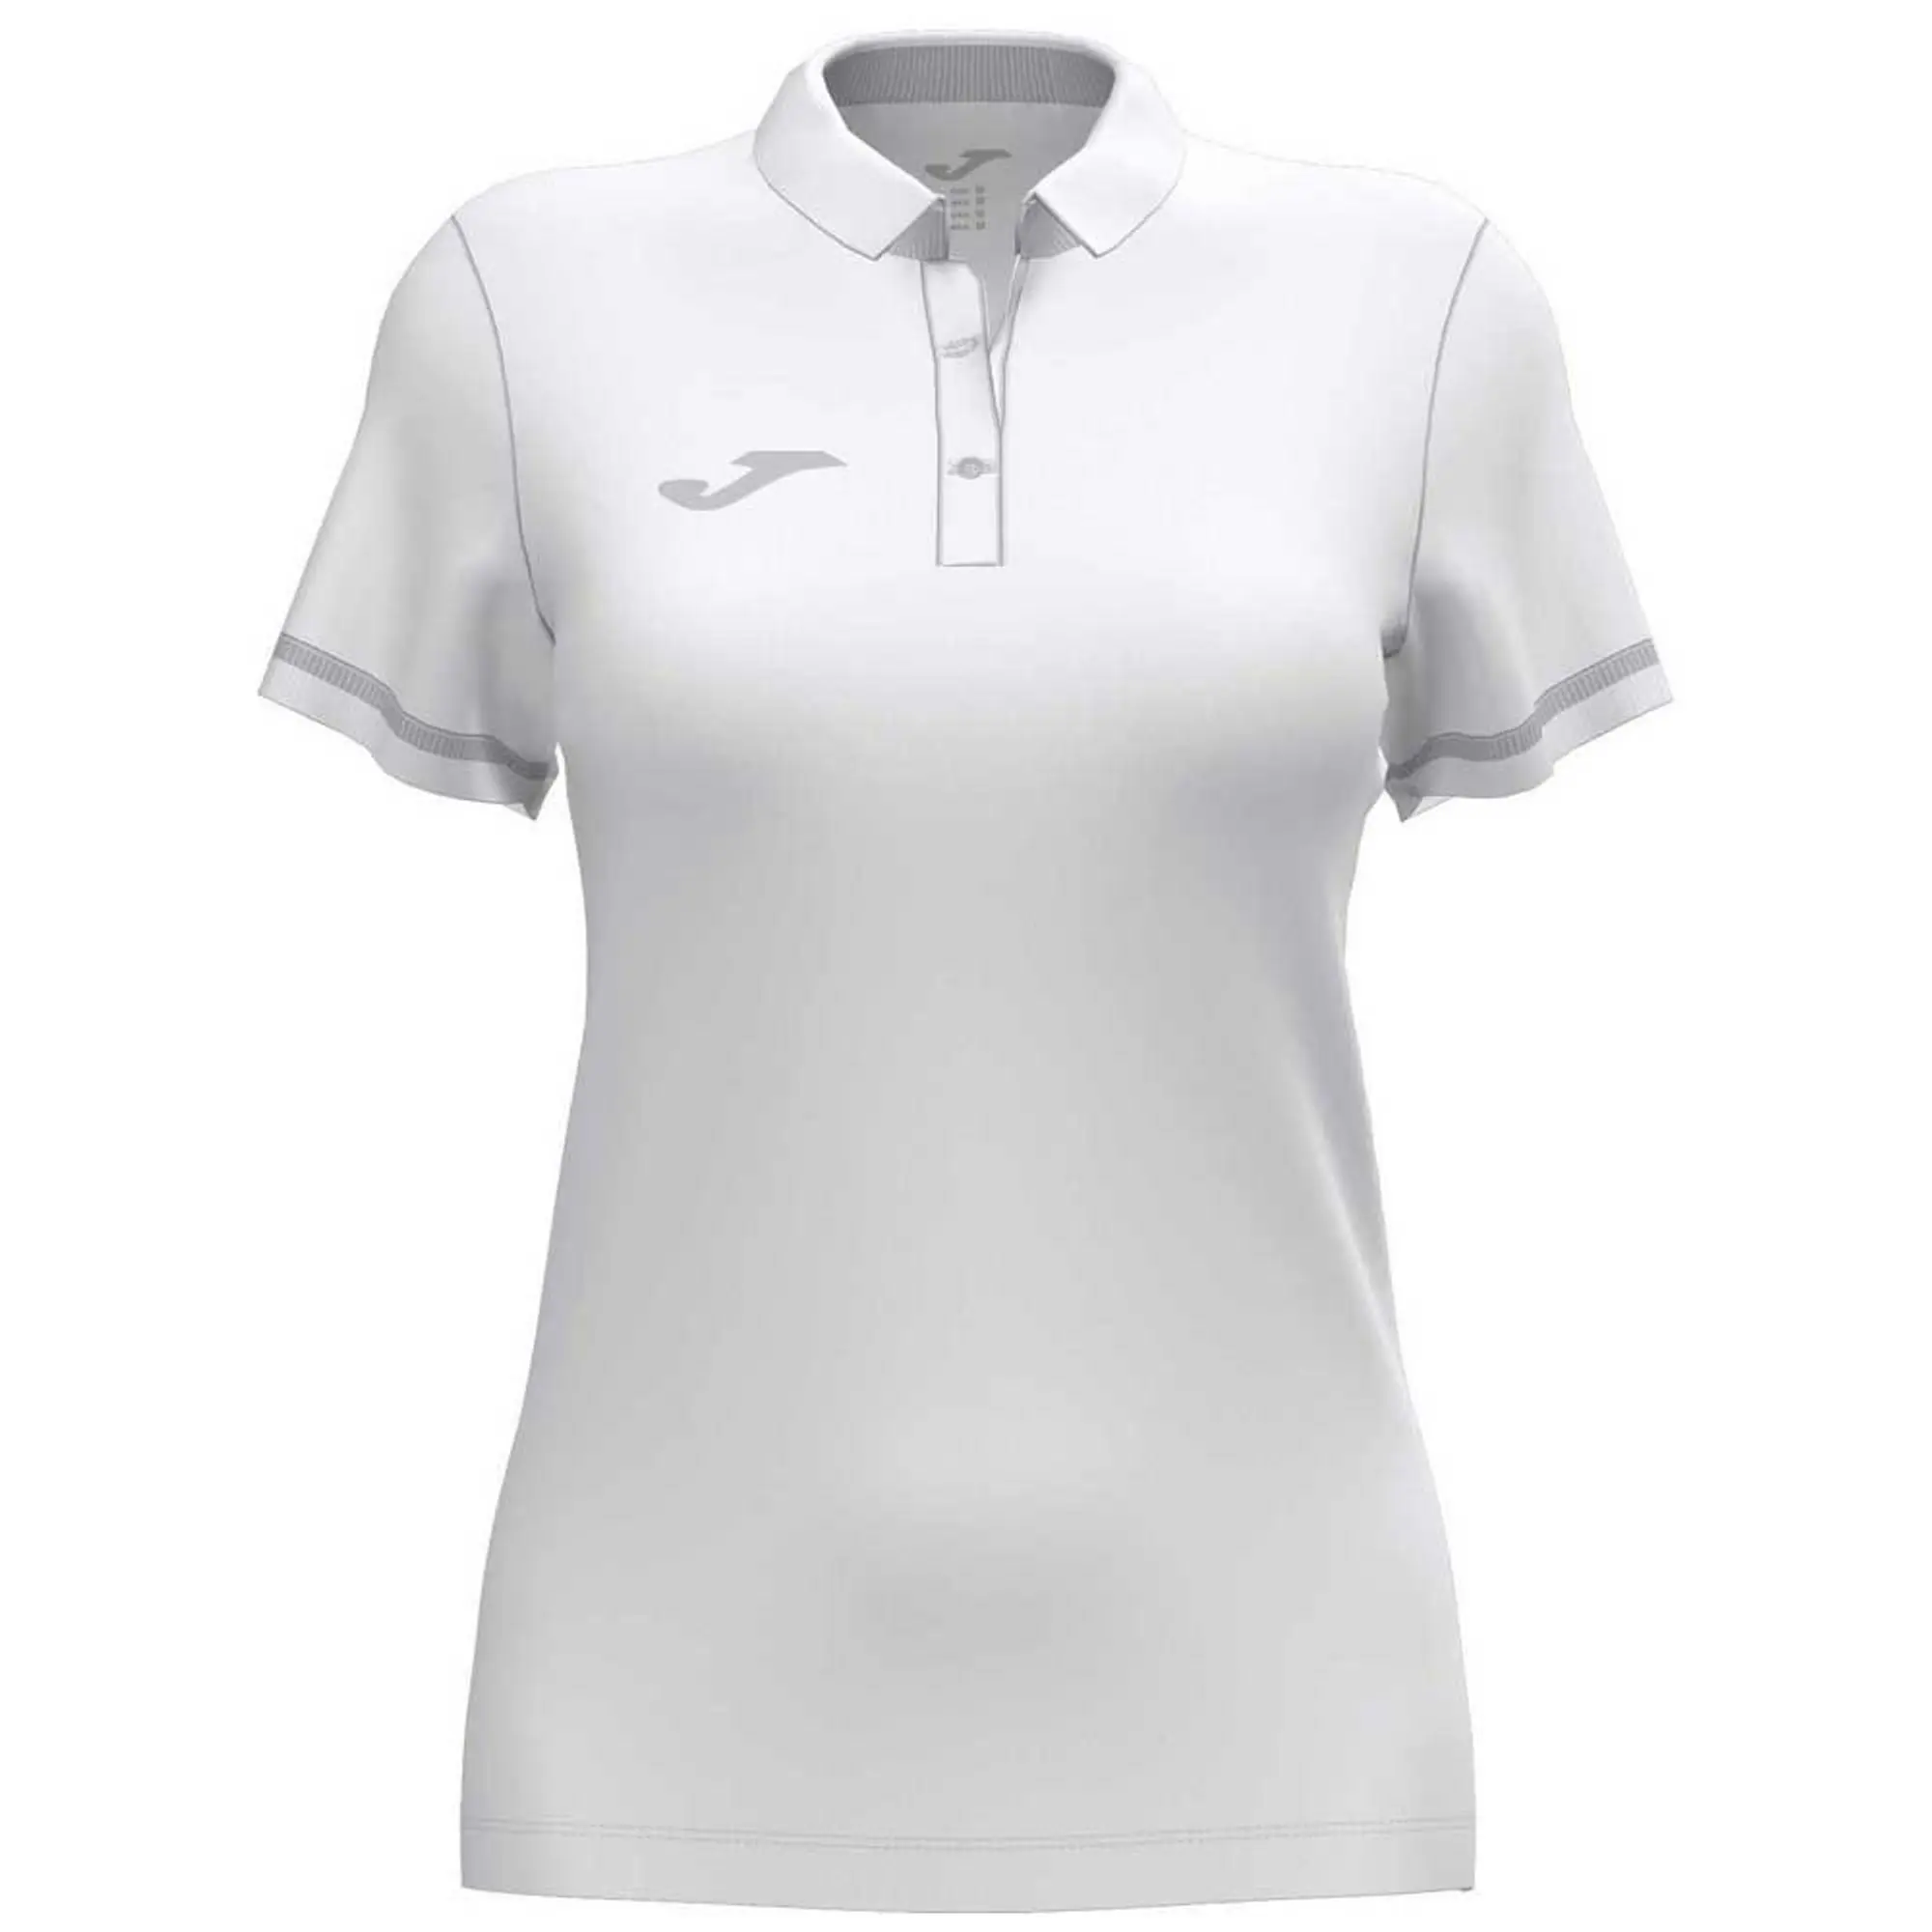 Joma Championship Vi Short Sleeve Polo Shirt  - White